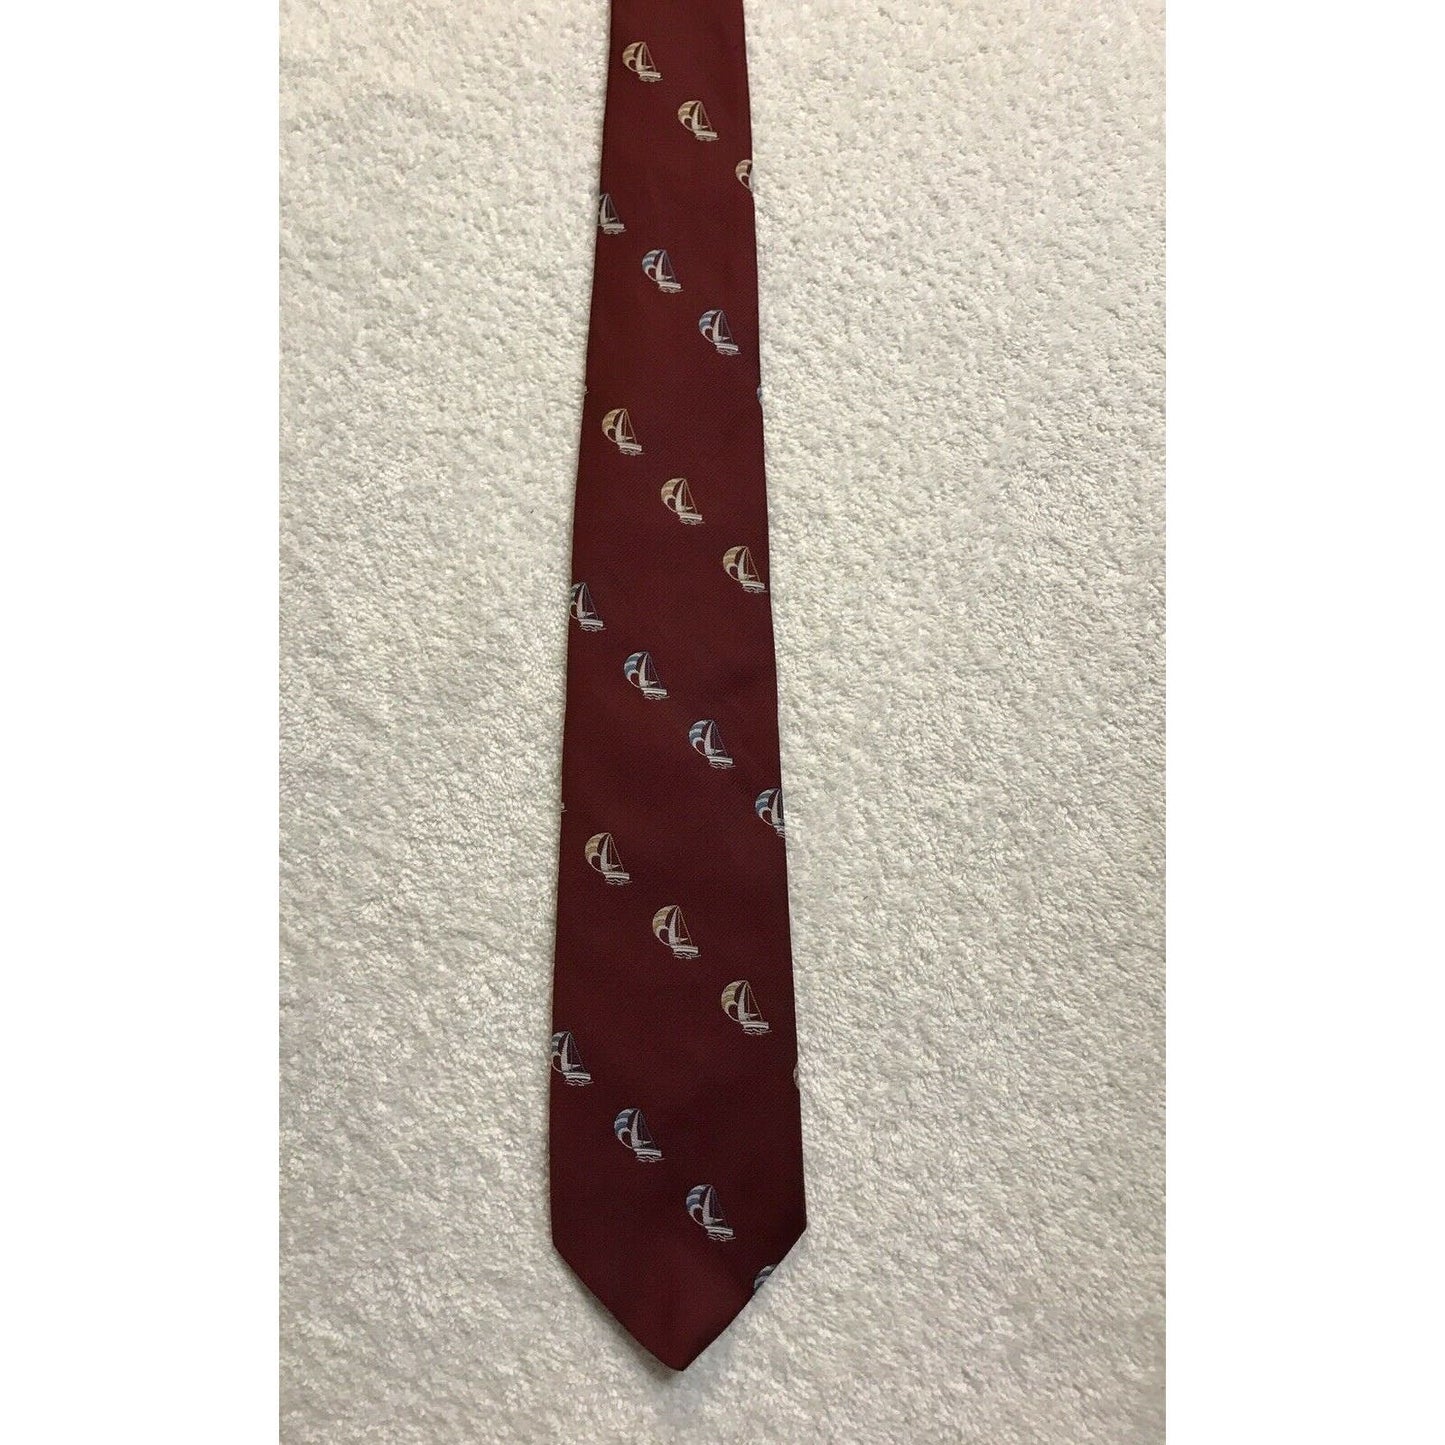 Shermans Red Sailboats Vintage Novelty Tie Necktie 100% Polyester